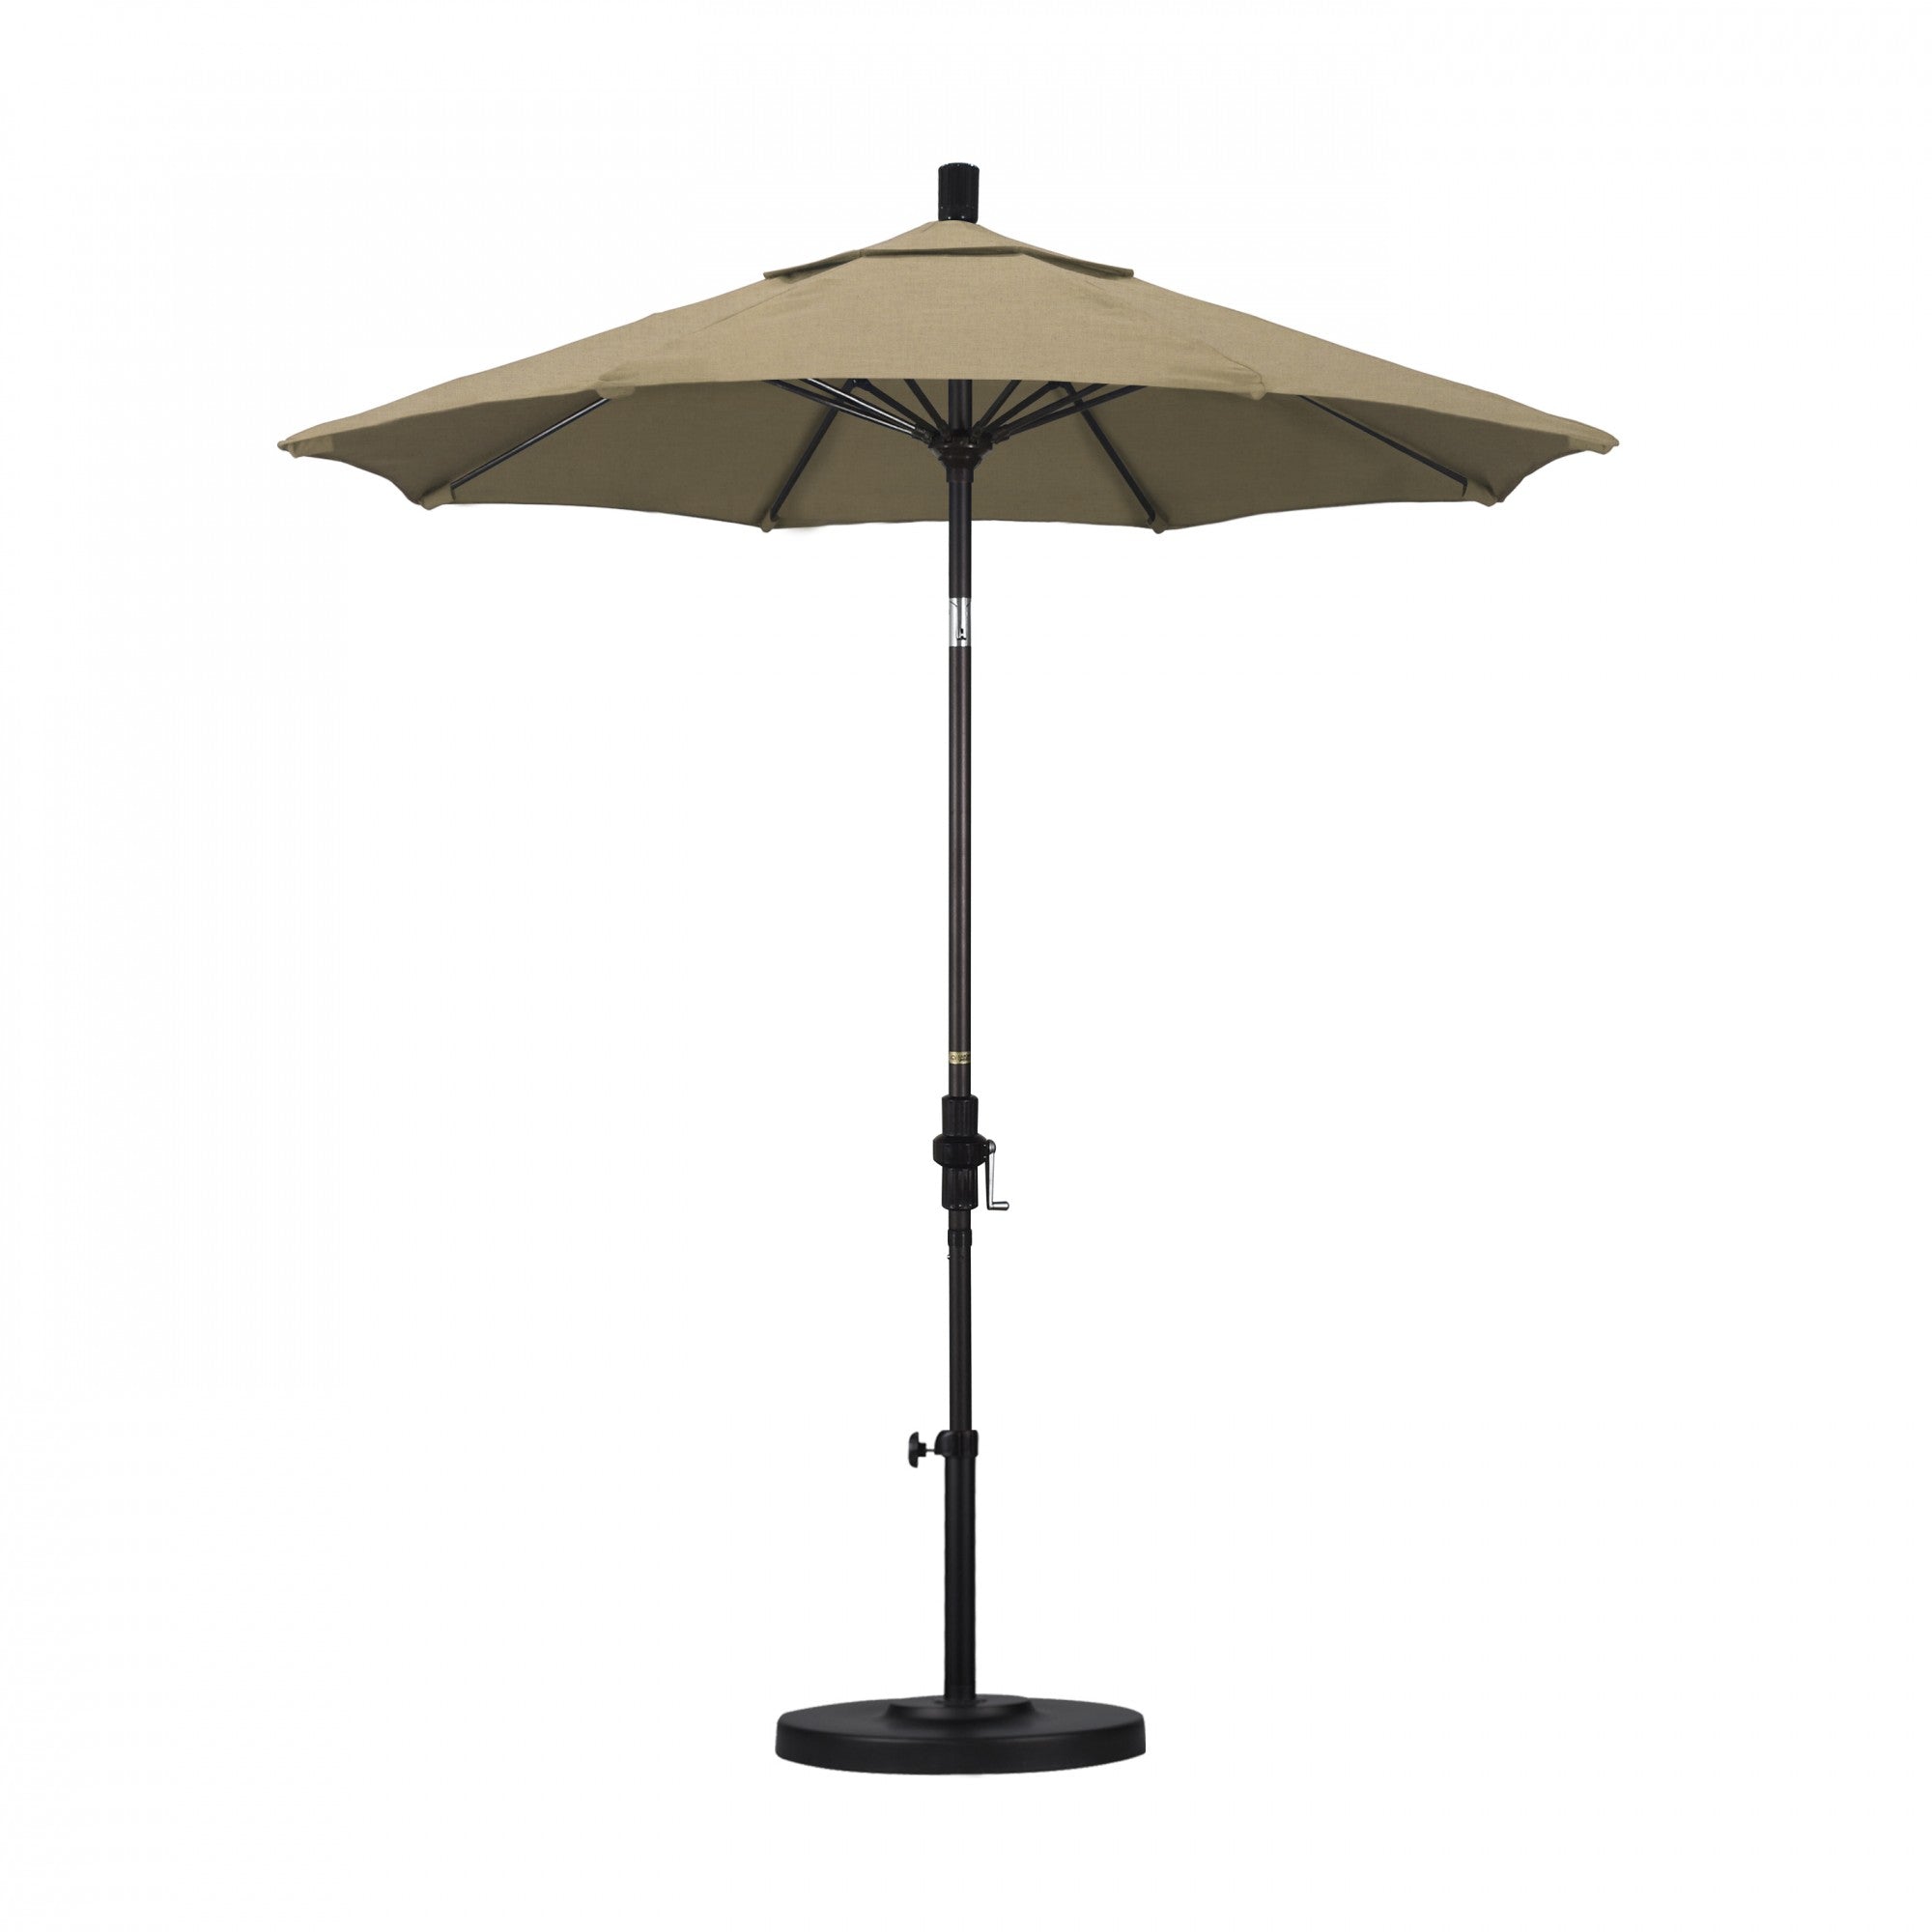 California Umbrella - 7.5' - Patio Umbrella Umbrella - Aluminum Pole - Heather Beige - Sunbrella  - GSCUF758117-5476